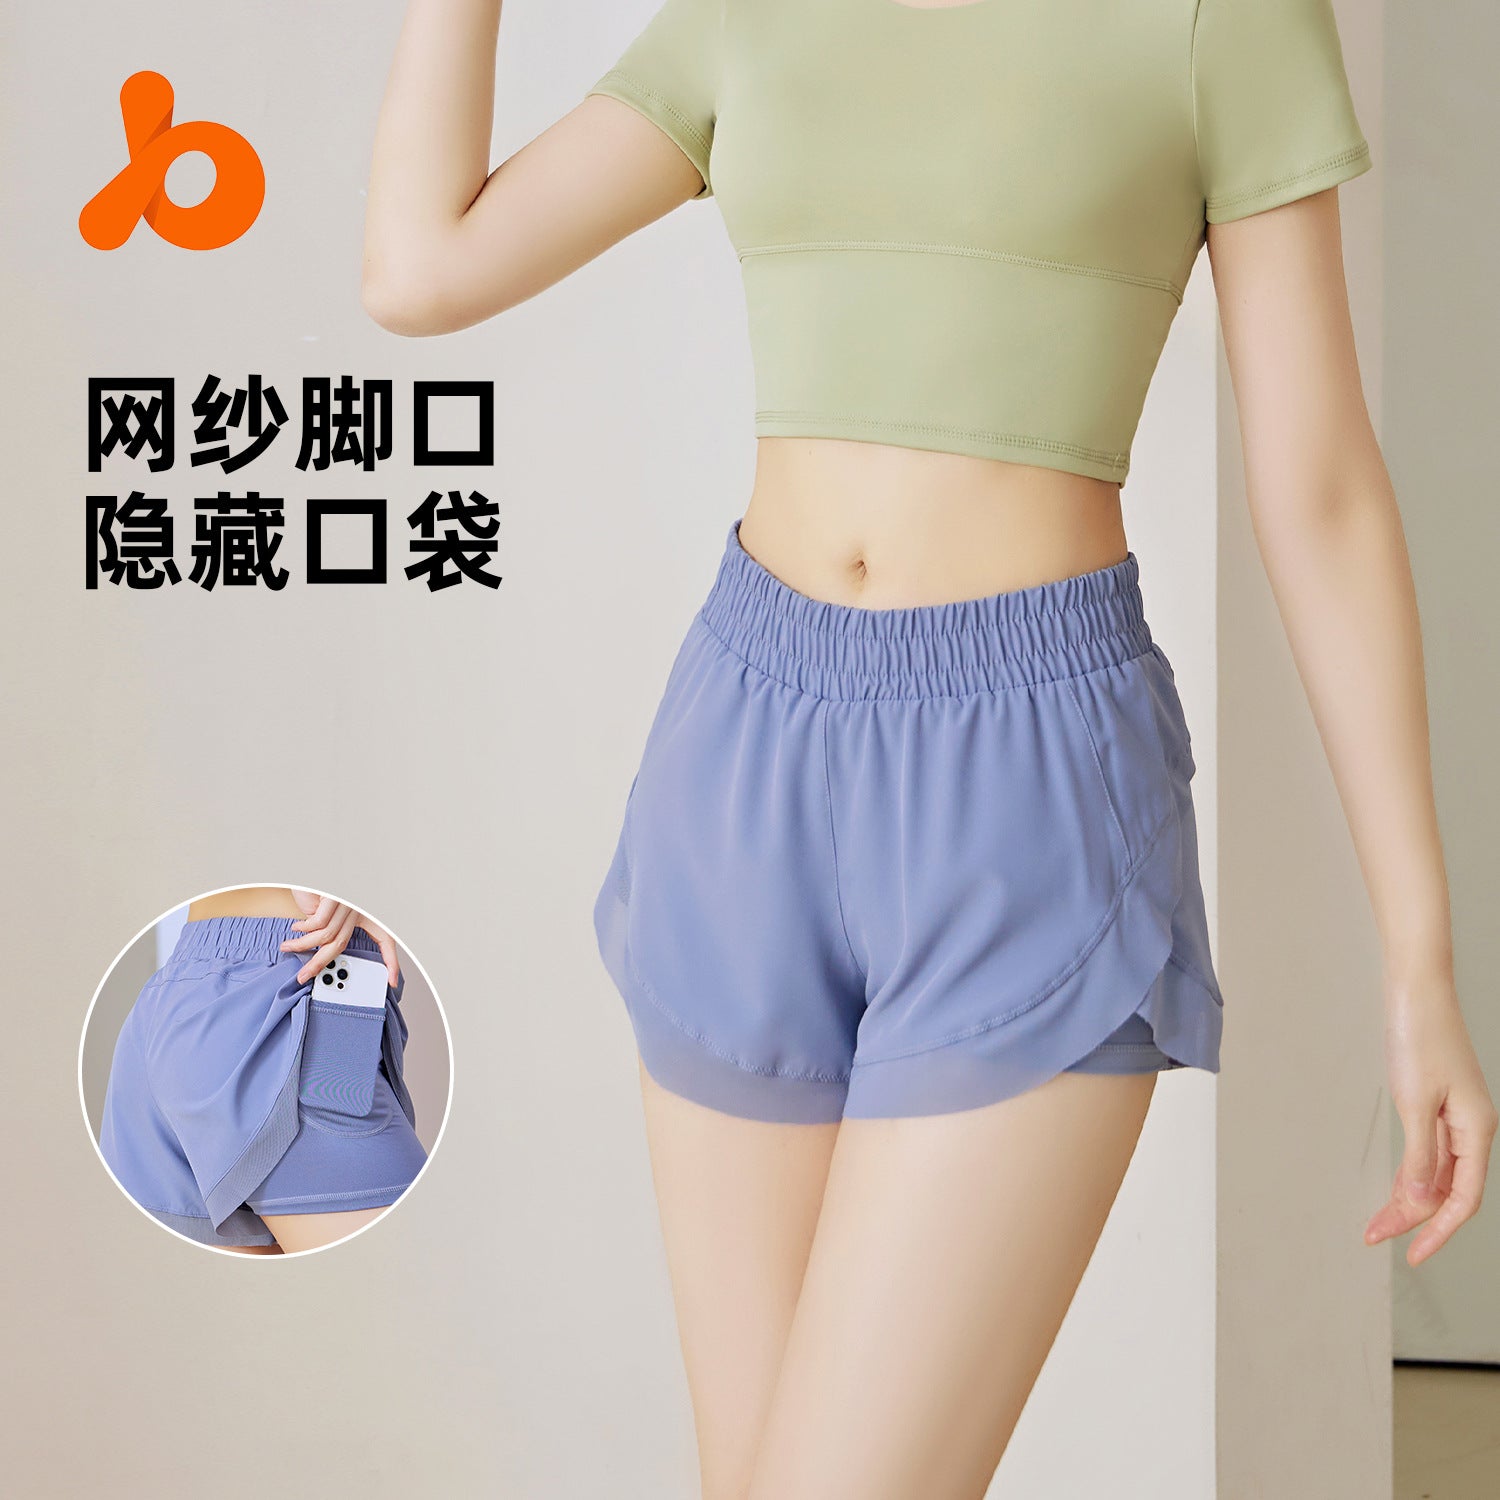 Juyitang mesh shorts peach quick-drying exercise fitness shorts seamless nude pocket yoga shorts female